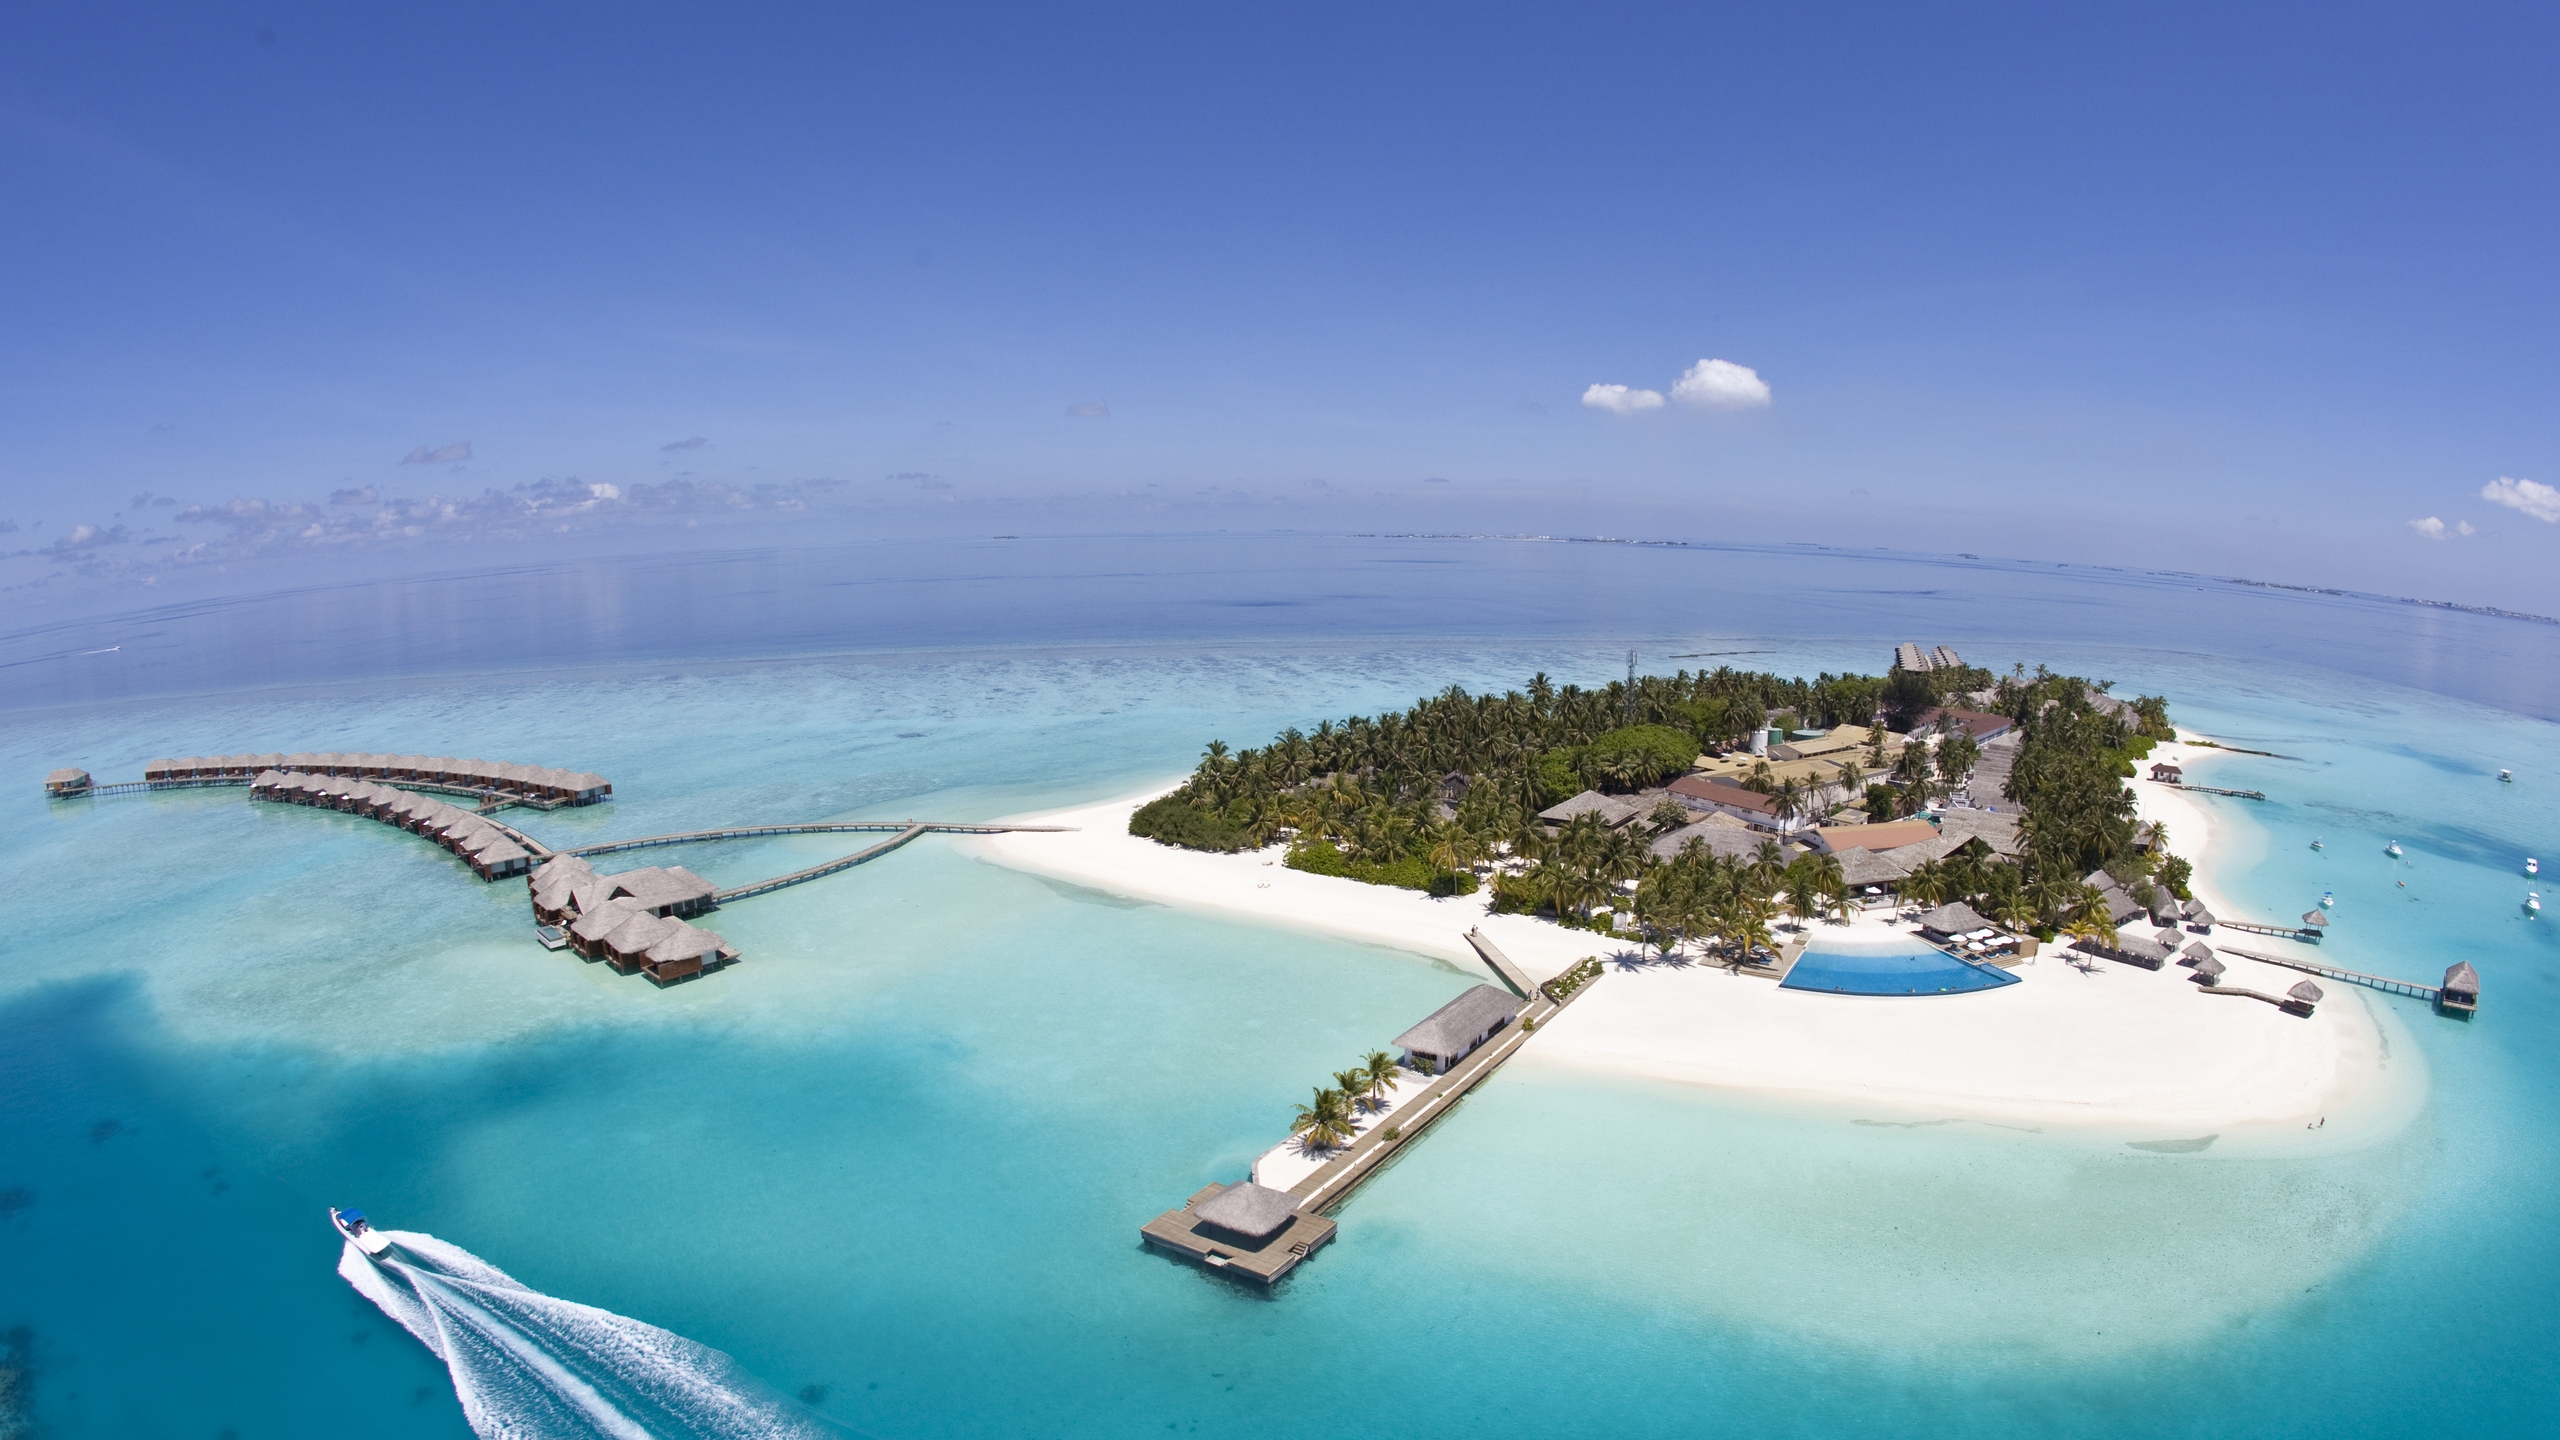 Maldives Island for 2560x1440 HDTV resolution